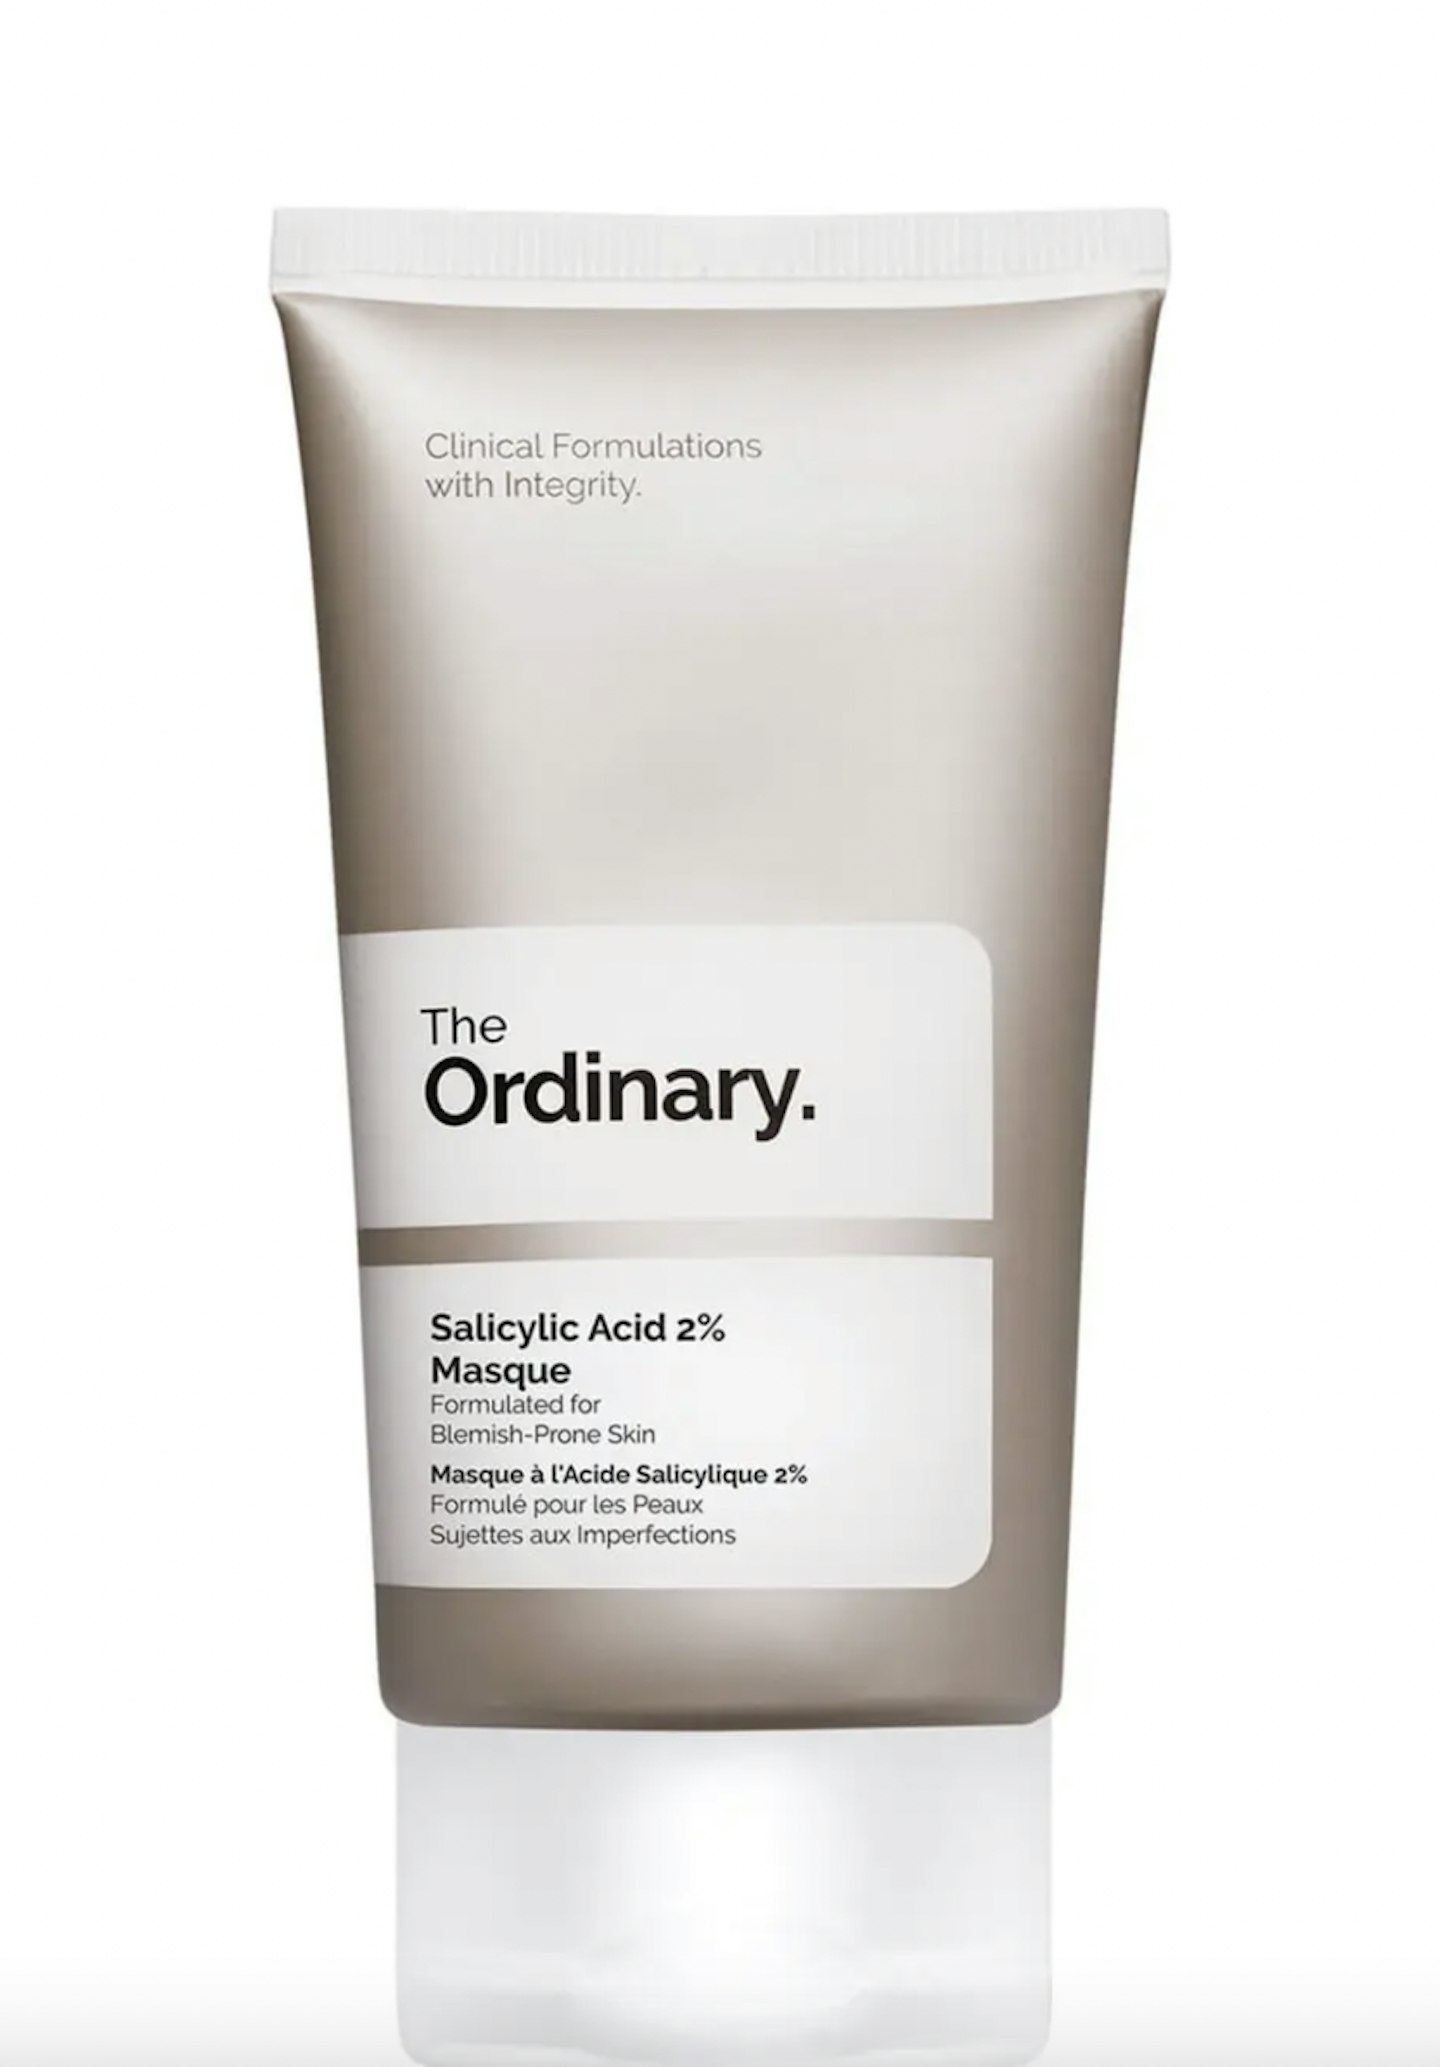 The Ordinary Salicylic Acid 2% Masque, £9.90